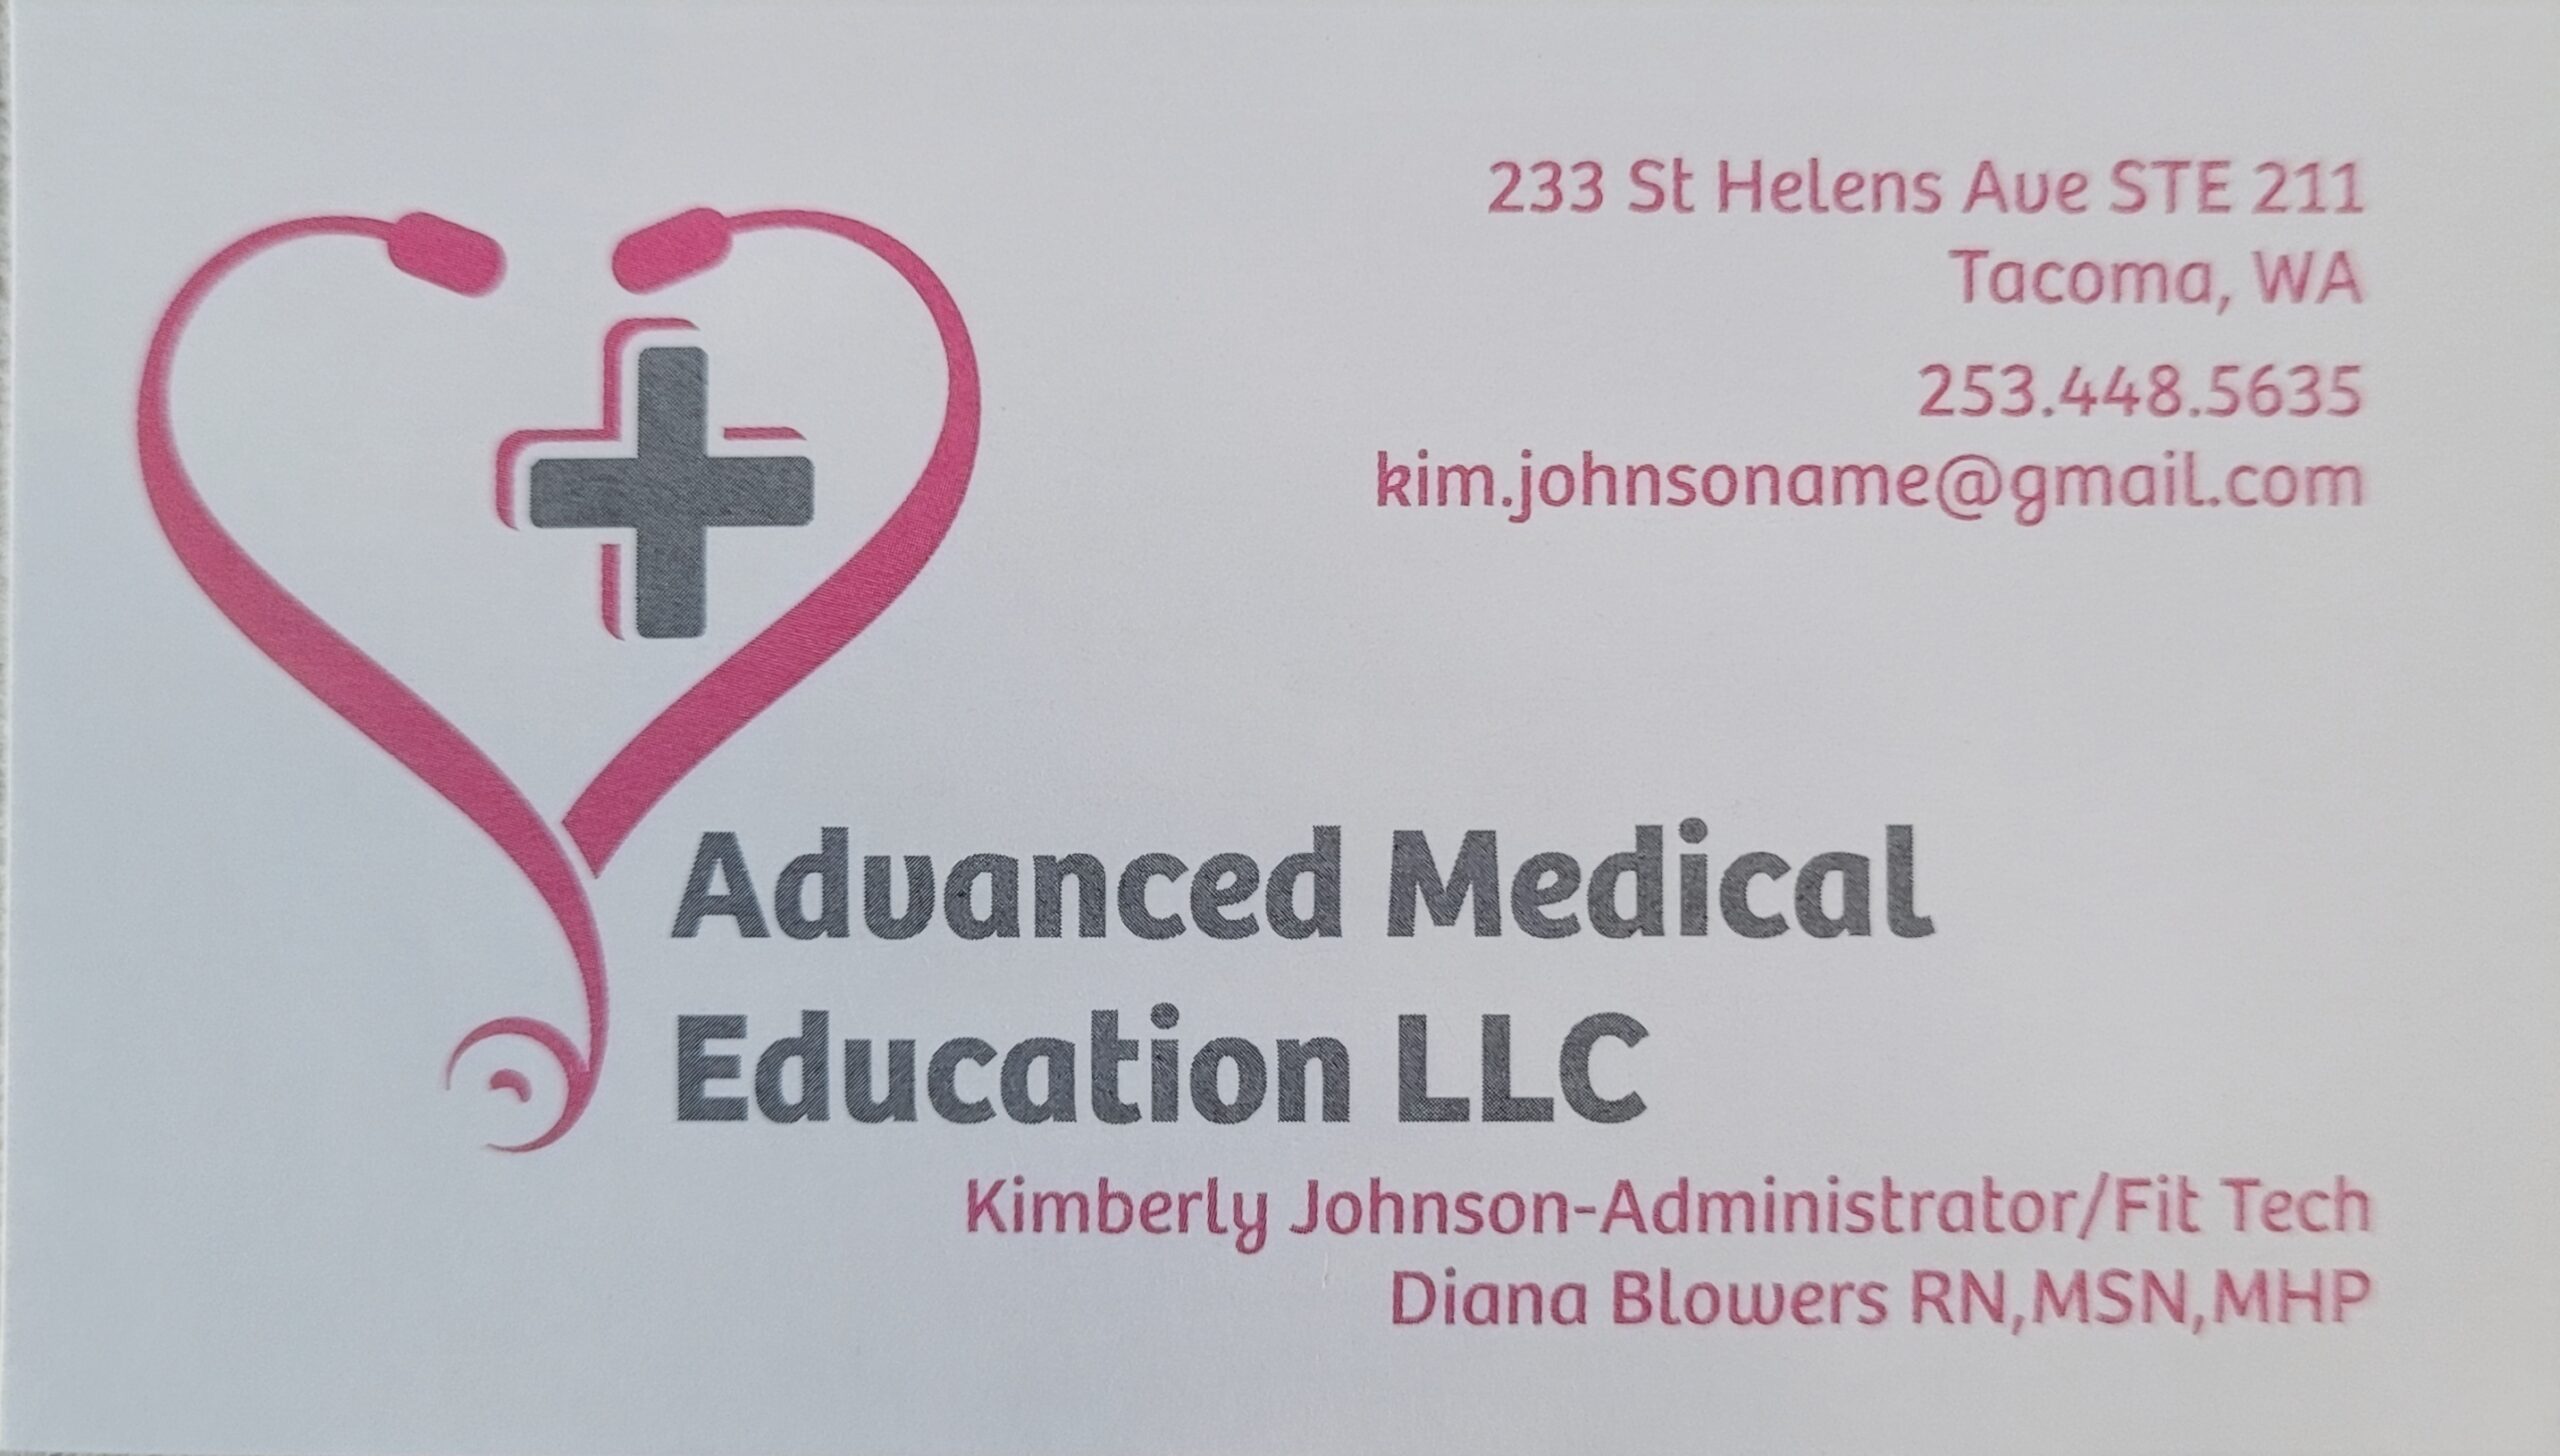 Advanced Medical Education LLC